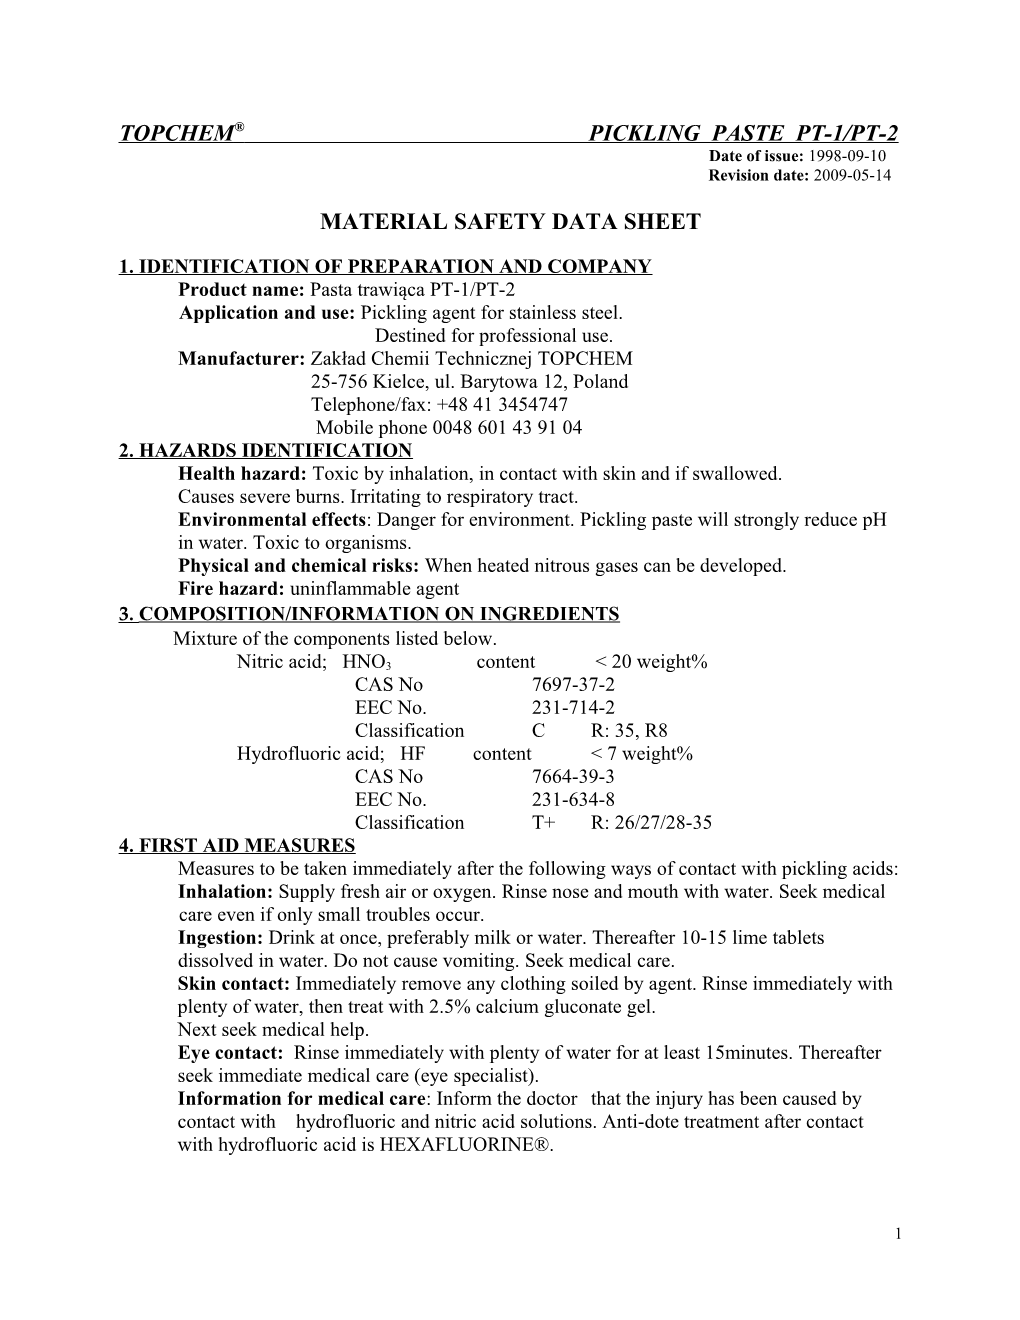 Material Safety Data Sheet Pickling Paste/Spray